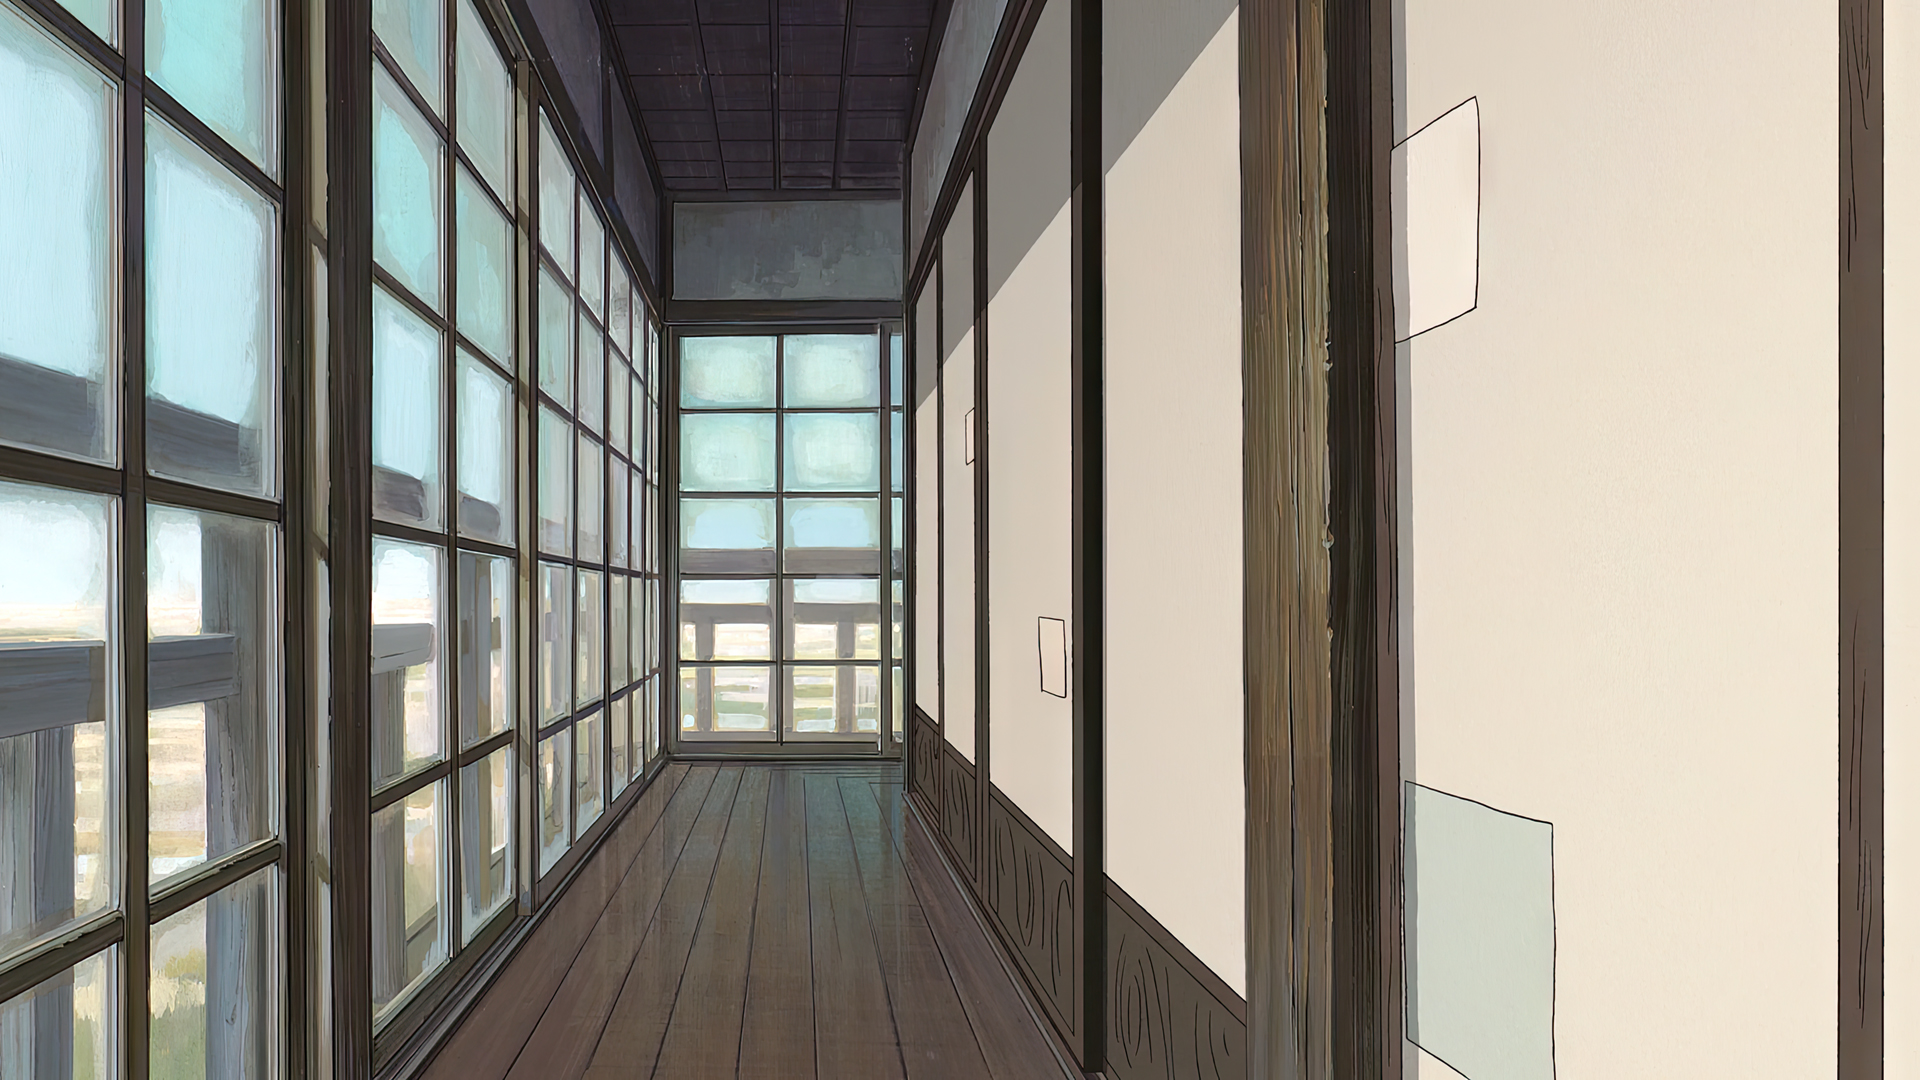 Anime 1920x1080 Spirited Away animated movies anime animation film stills Studio Ghibli Hayao Miyazaki hallway window floor